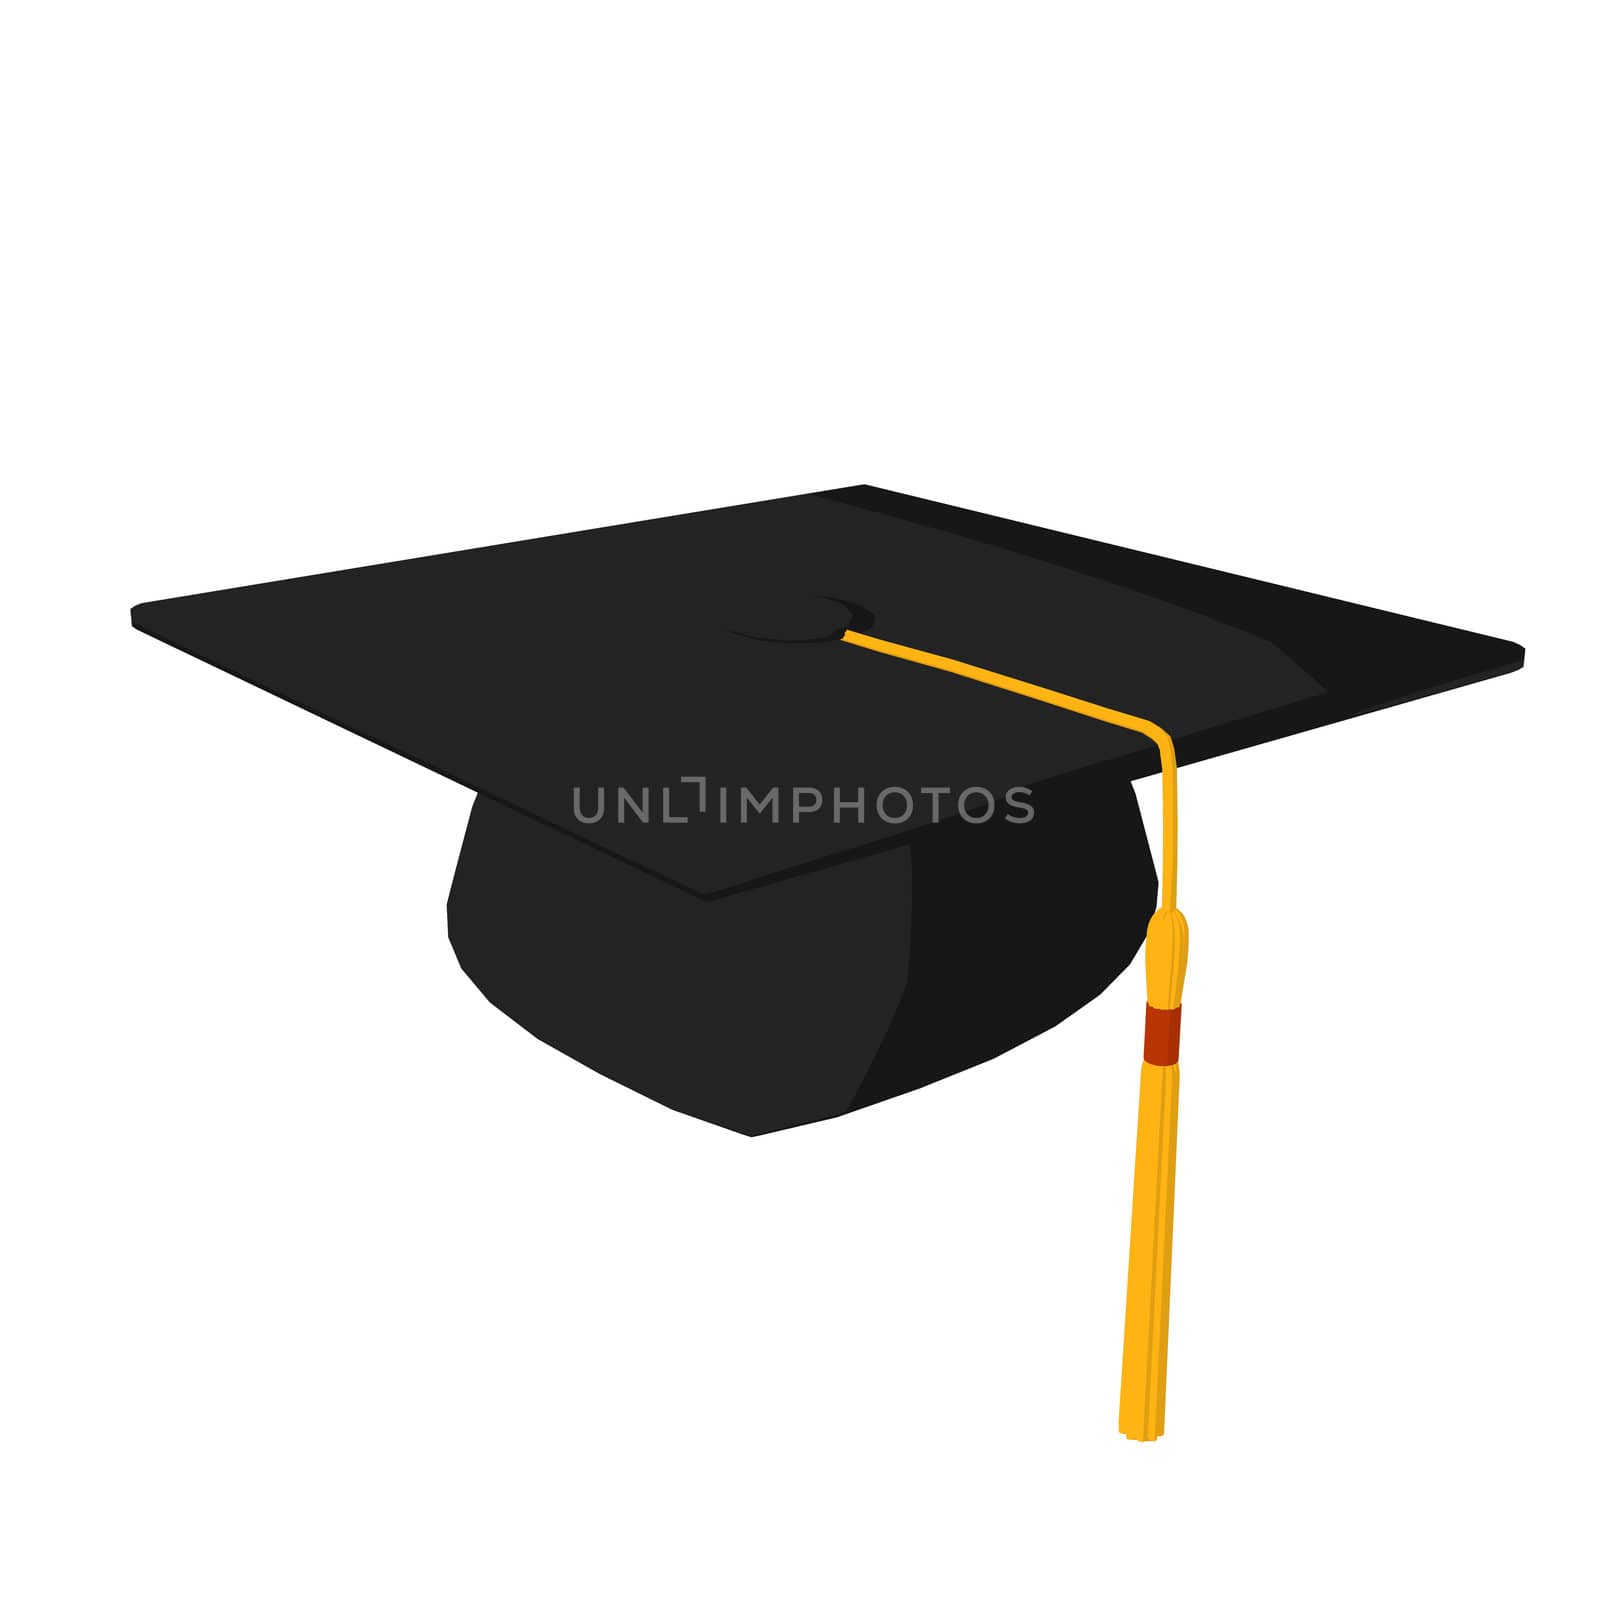 Graducation Cap Illustration by kathygold